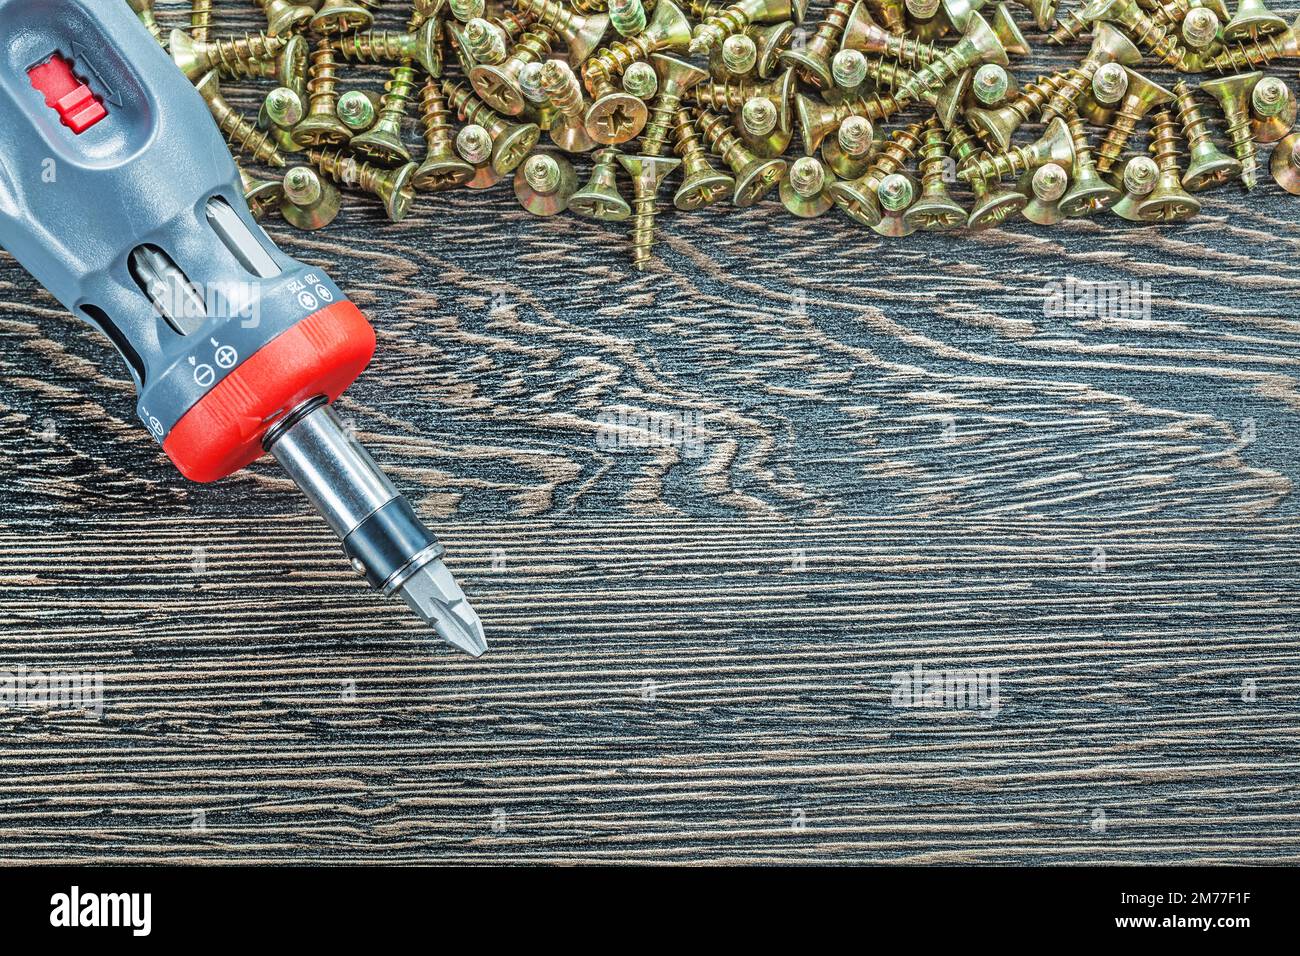 Screwdriver heap of screws on wooden board. Stock Photo